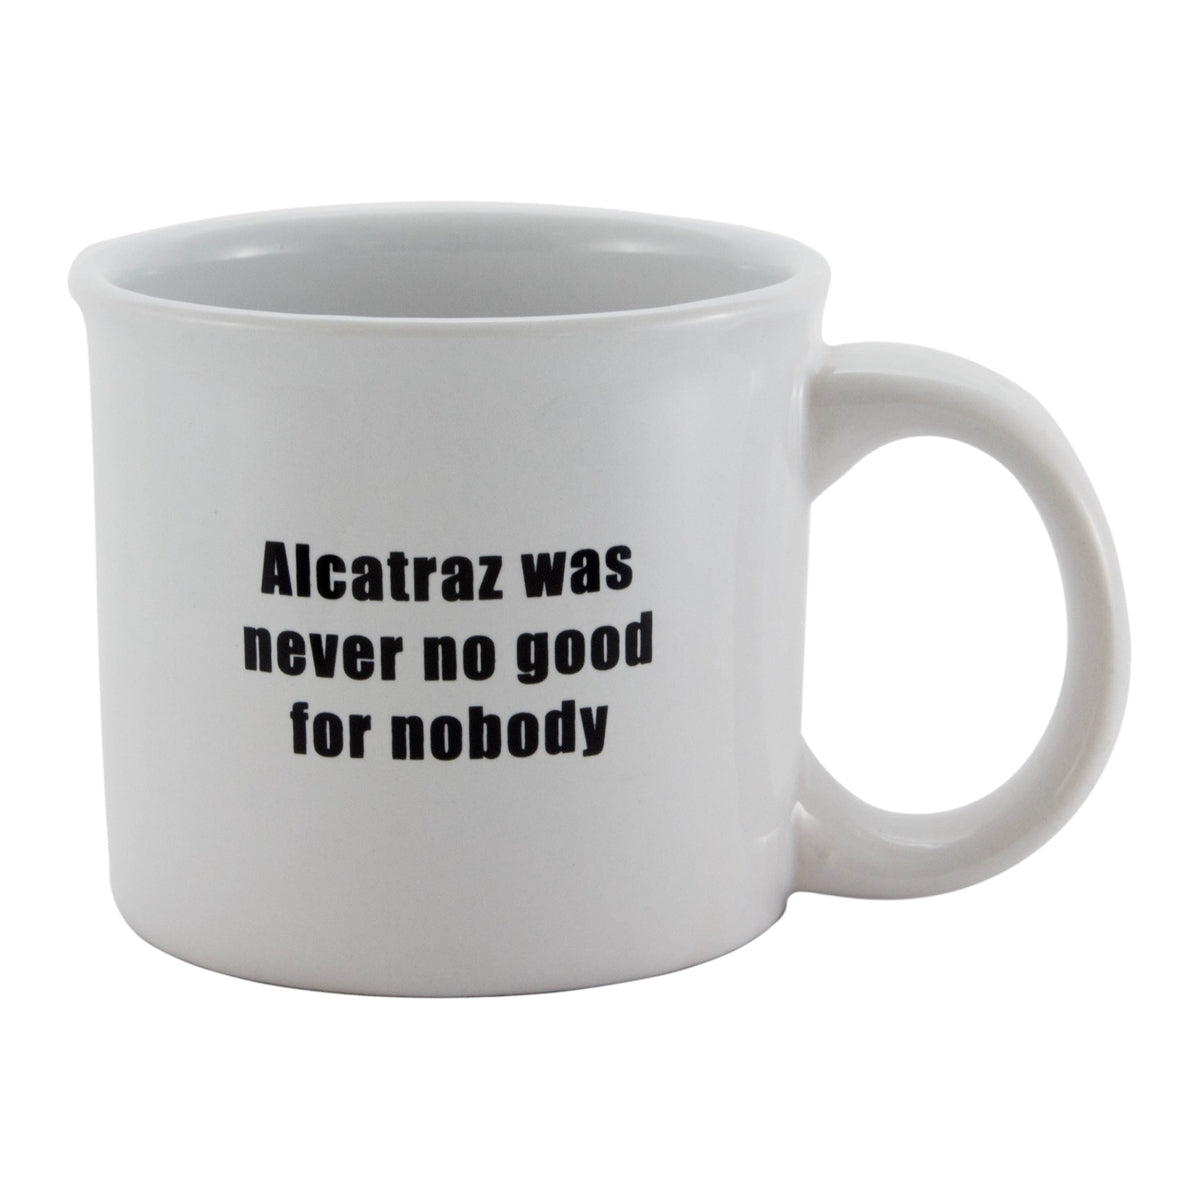 14 oz. white mug with black text "Alcatraz Maximum Security" and "Alcatraz was never no good for nobody" quote.